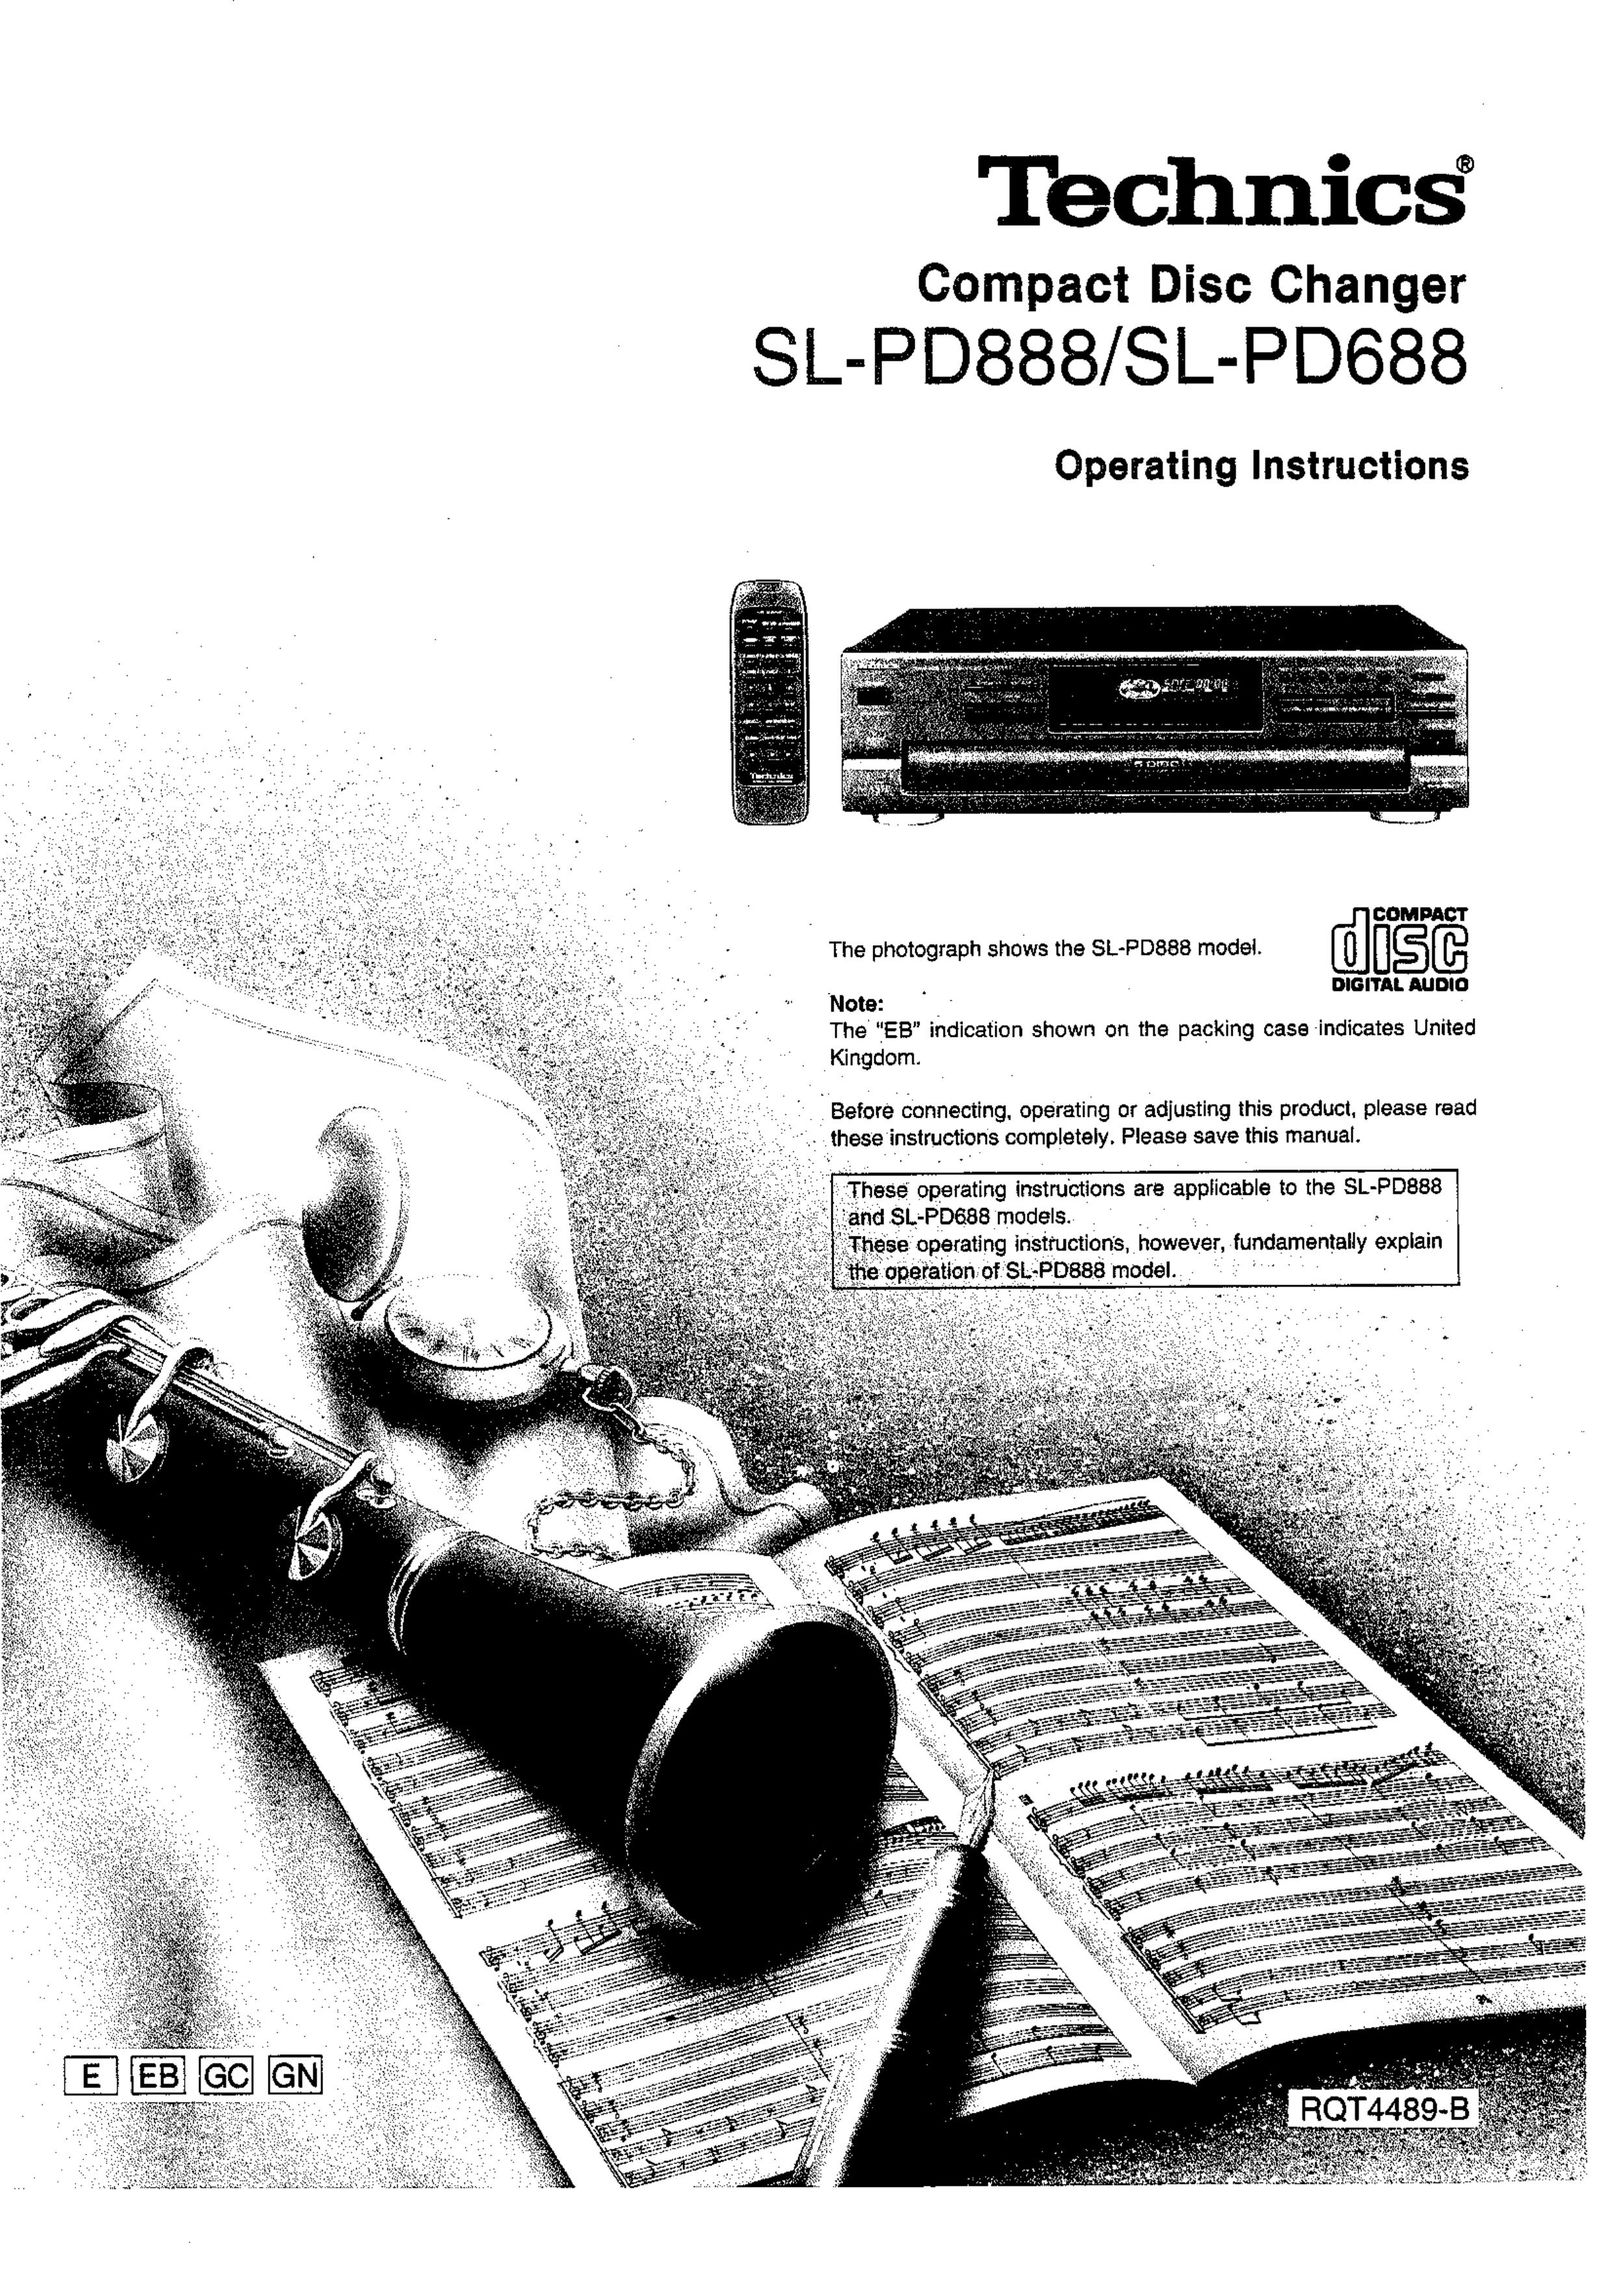 Technics SL-PD888 CD Player User Manual